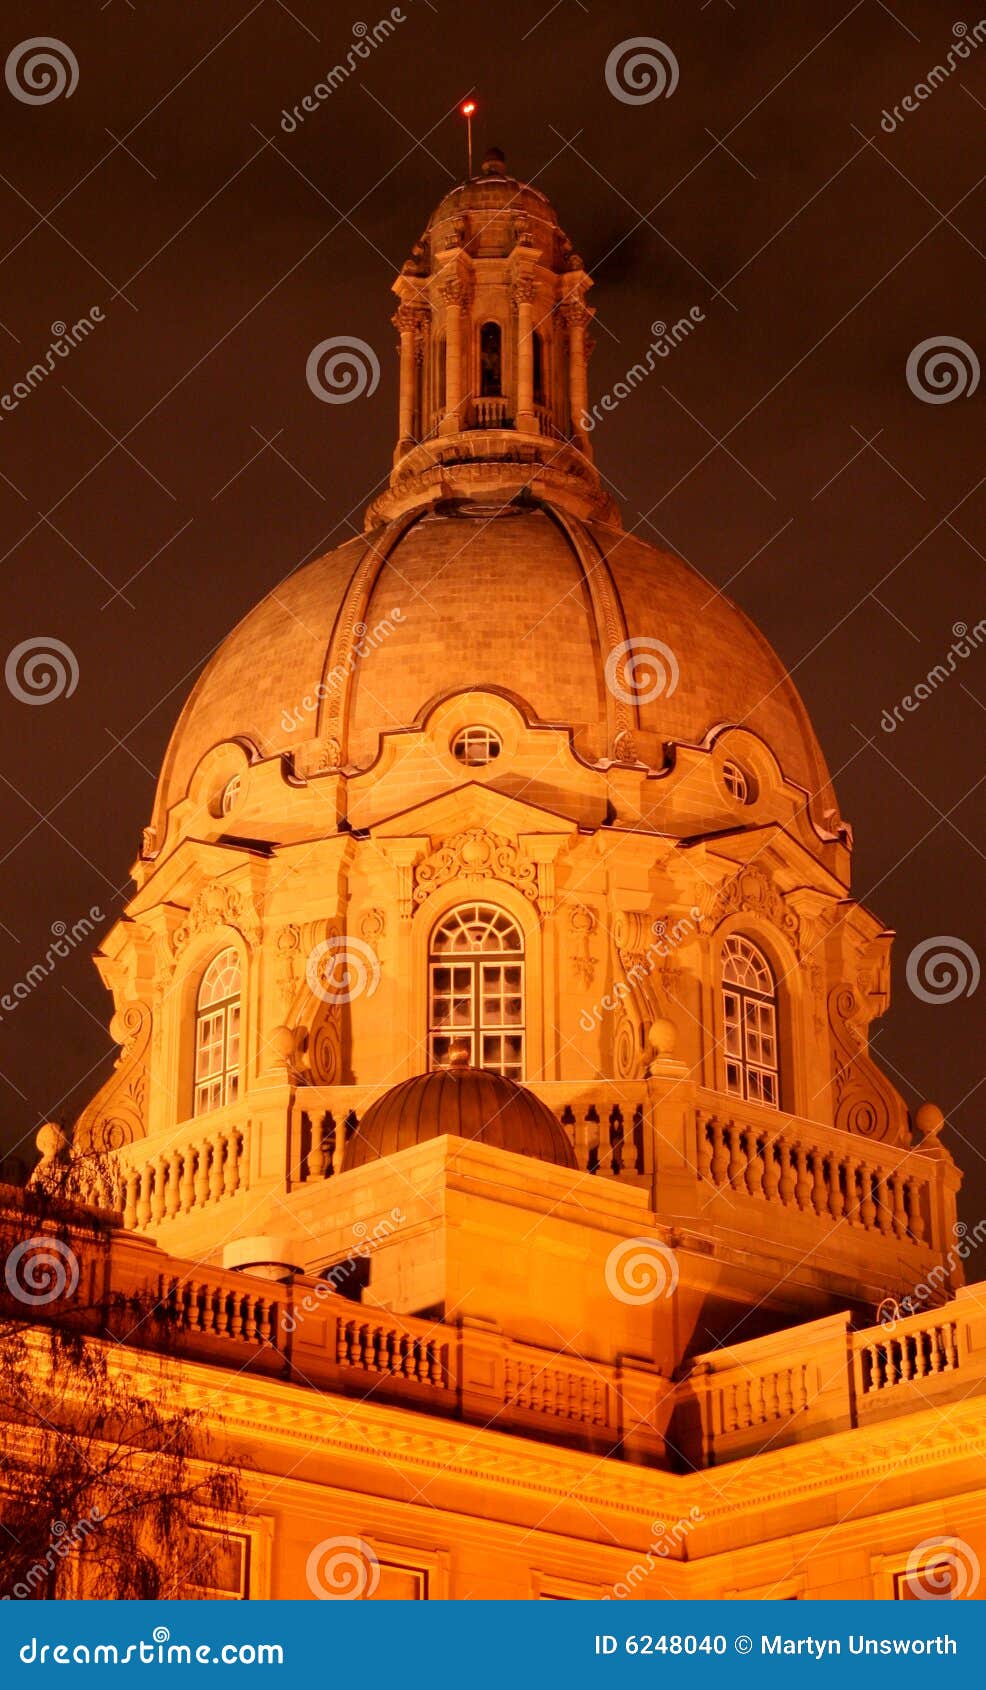 alberta legislature building at night